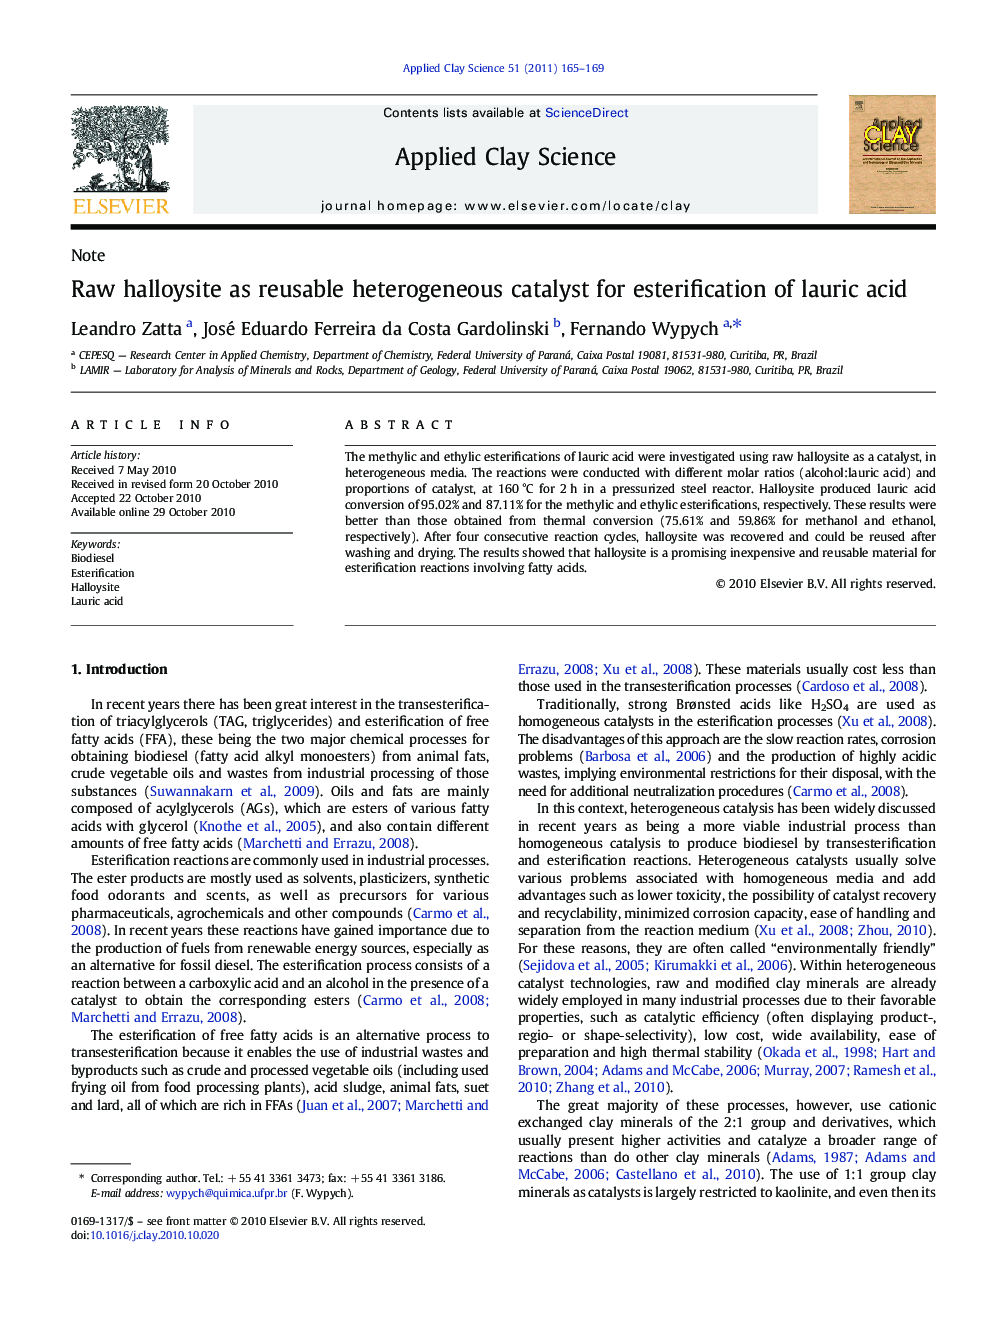 Raw halloysite as reusable heterogeneous catalyst for esterification of lauric acid